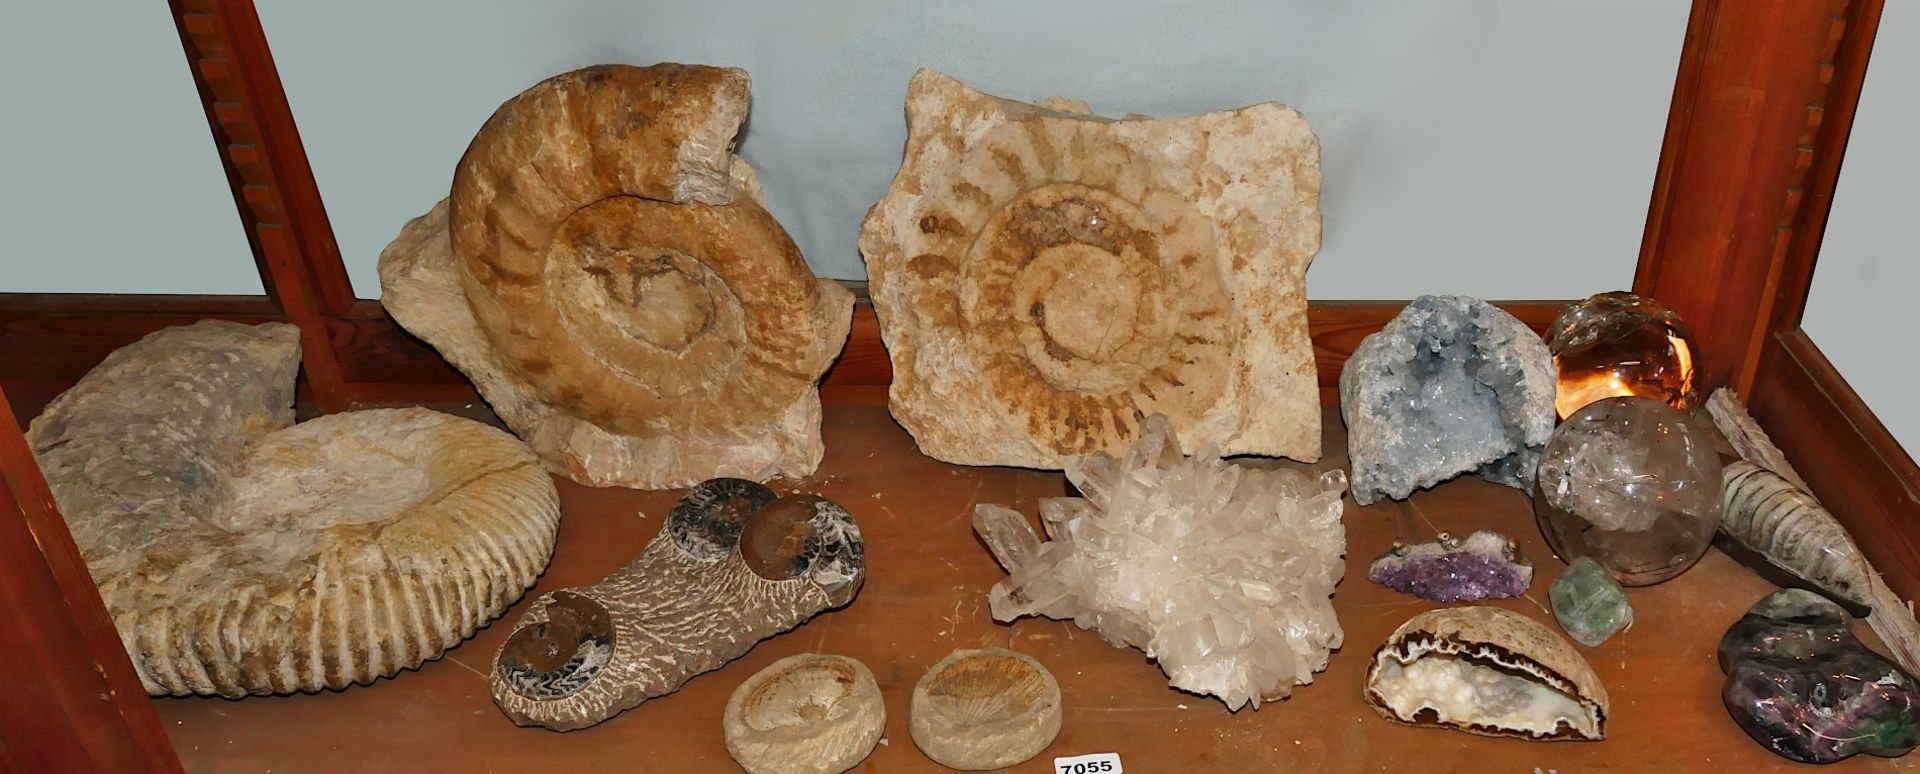 1 Sammlung Mineralien und Fossilien z.B. wohl Bergkristall ca. 16x29x28cm, Amethyst ca. L 13cm, Coel